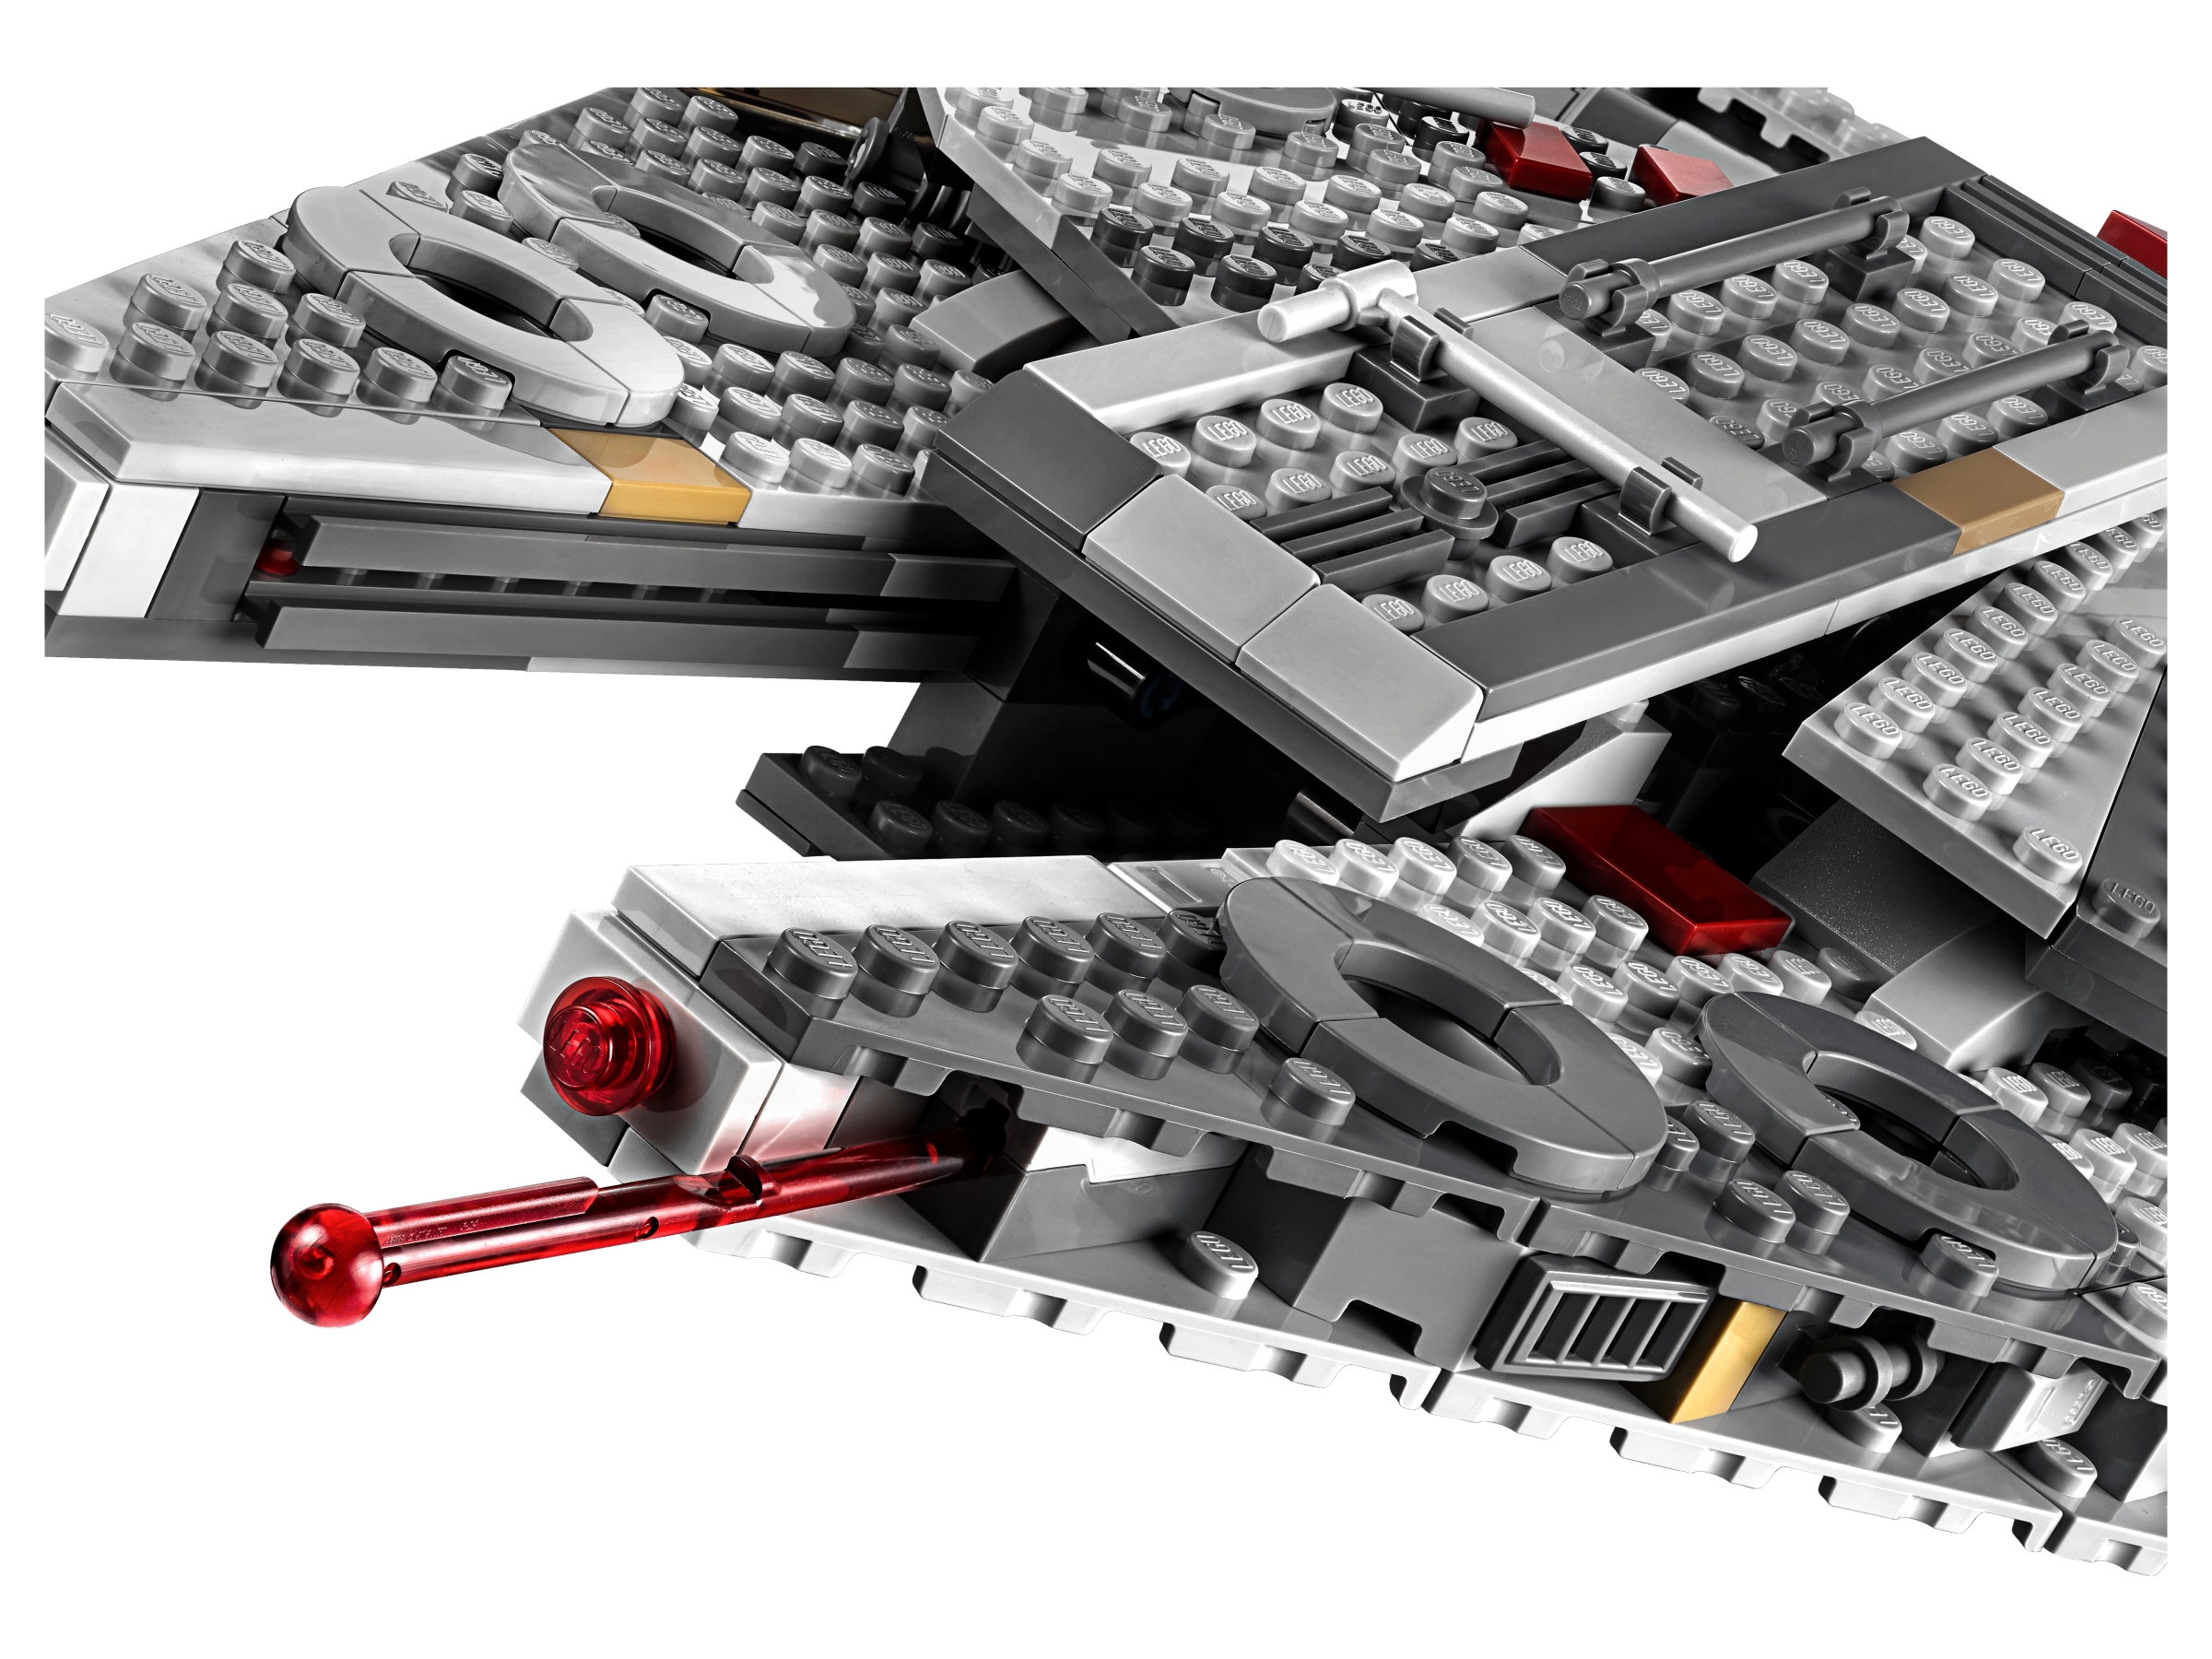 LEGO Star Wars Millennium Falcon 75257 Building Set